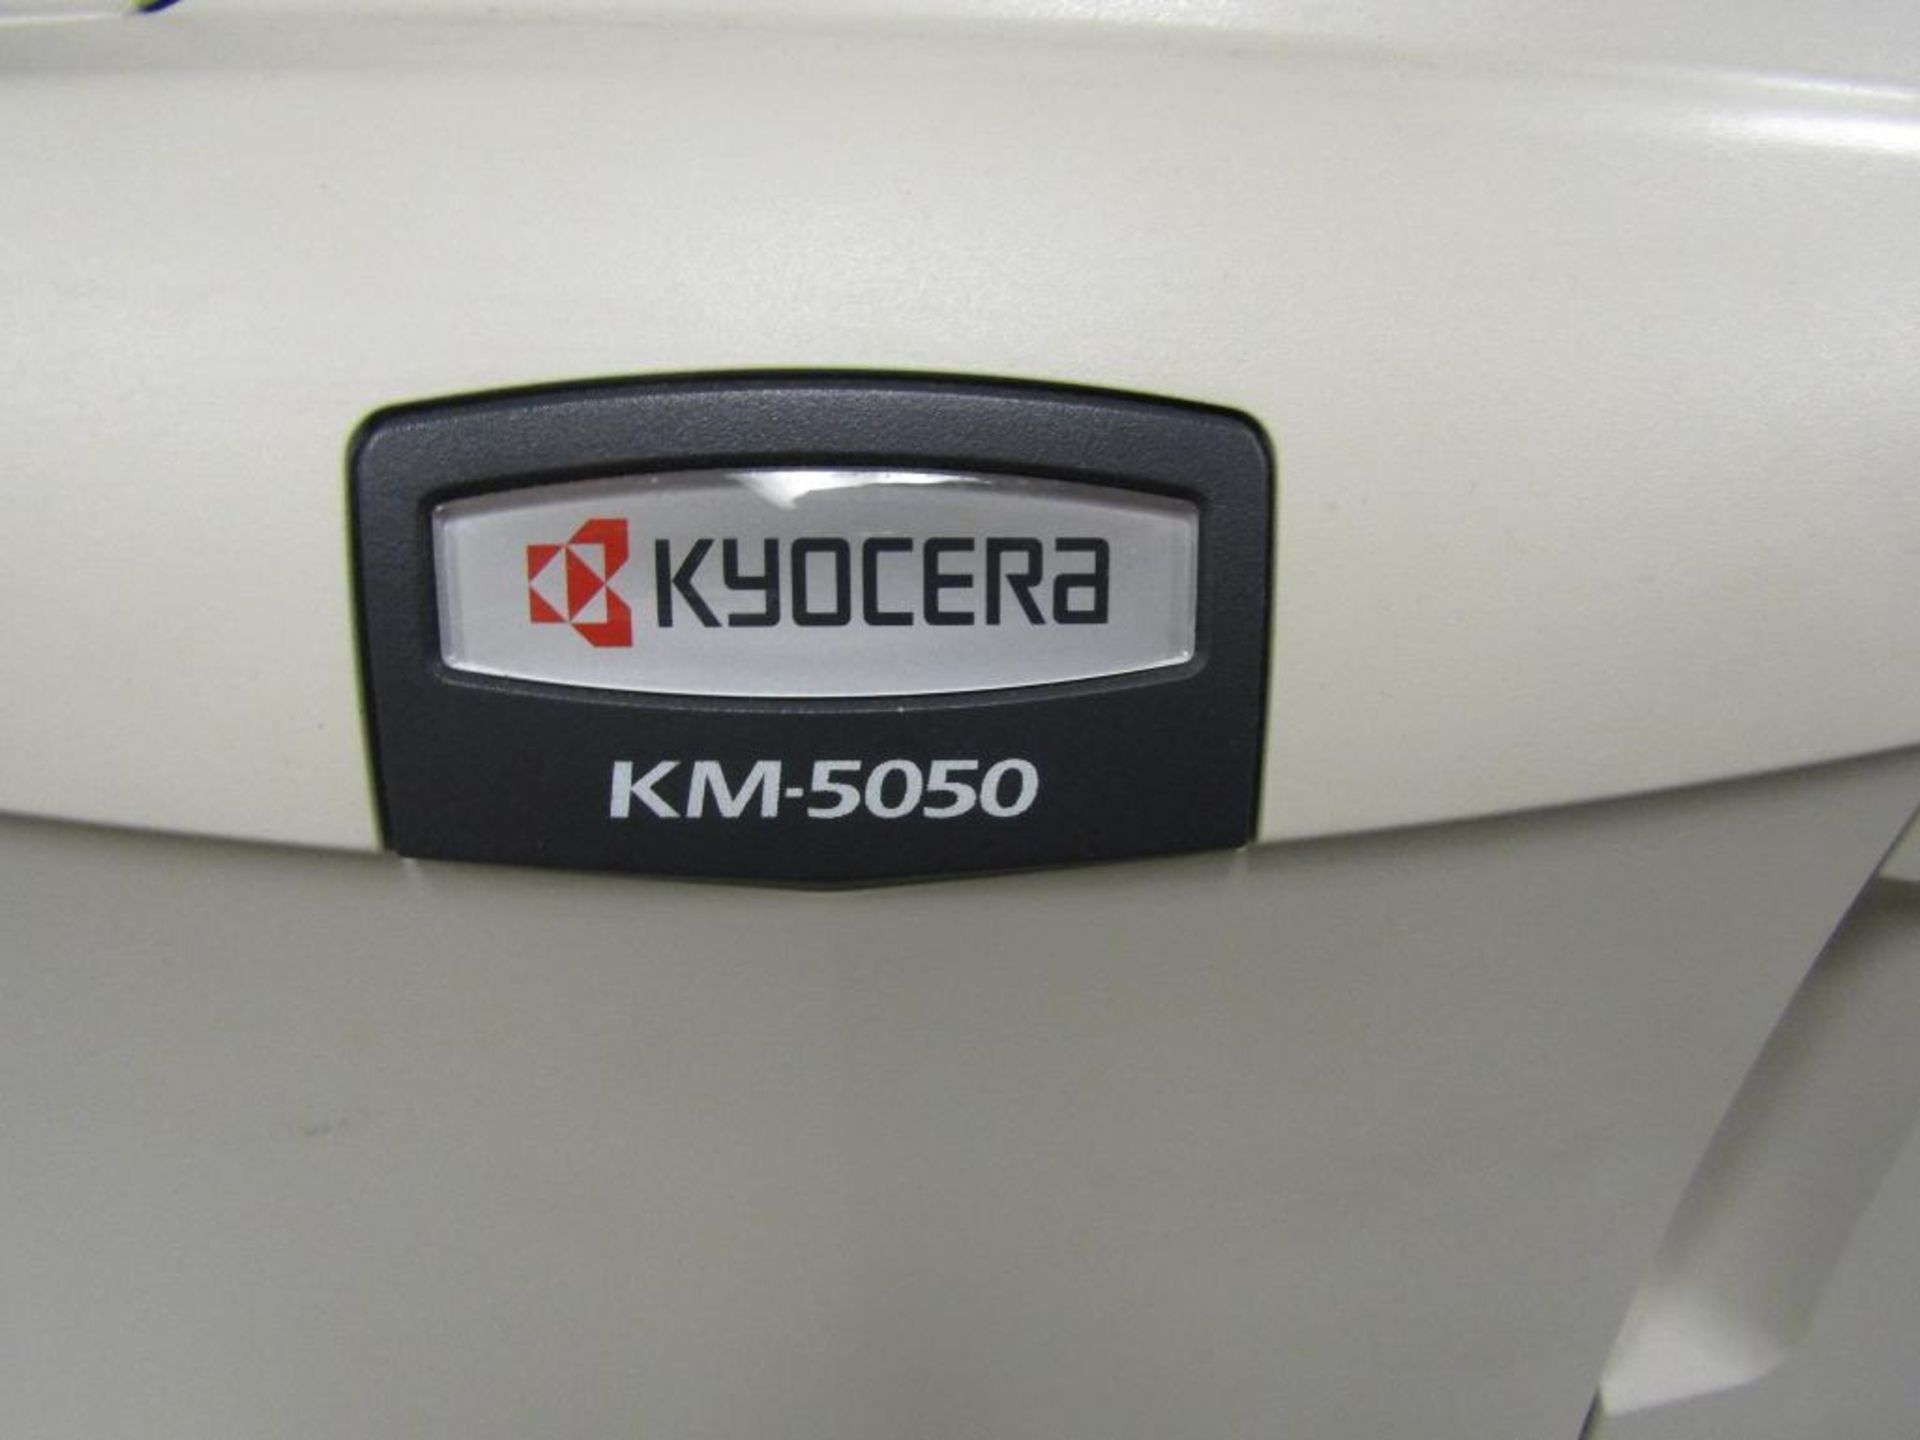 Kyocera KM 50-50 Printer - Image 4 of 4